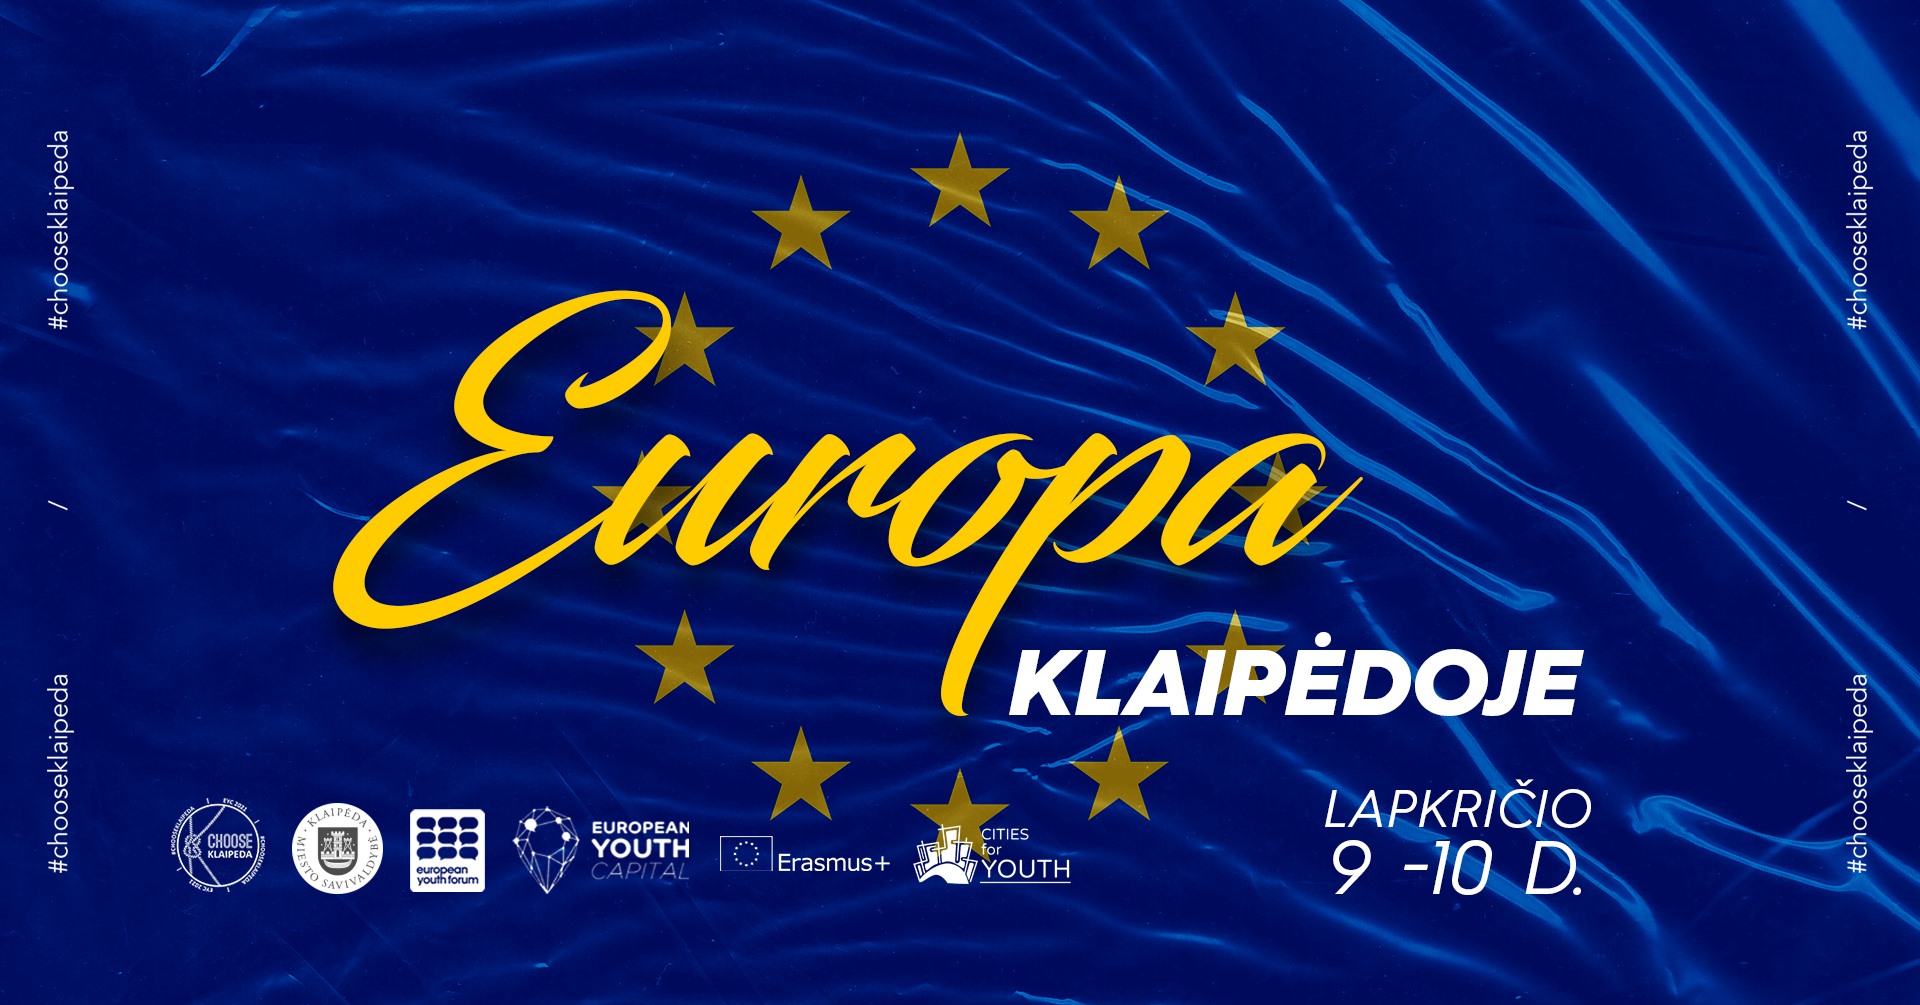 Europa Klaipėdoje/ Europe in Klaipeda